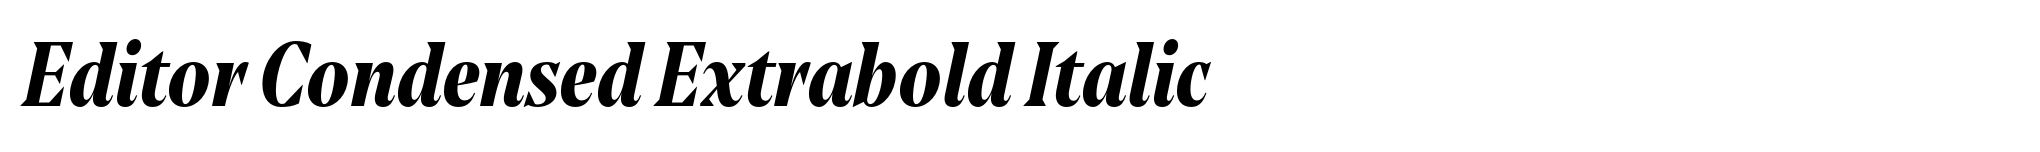 Editor Condensed Extrabold Italic image